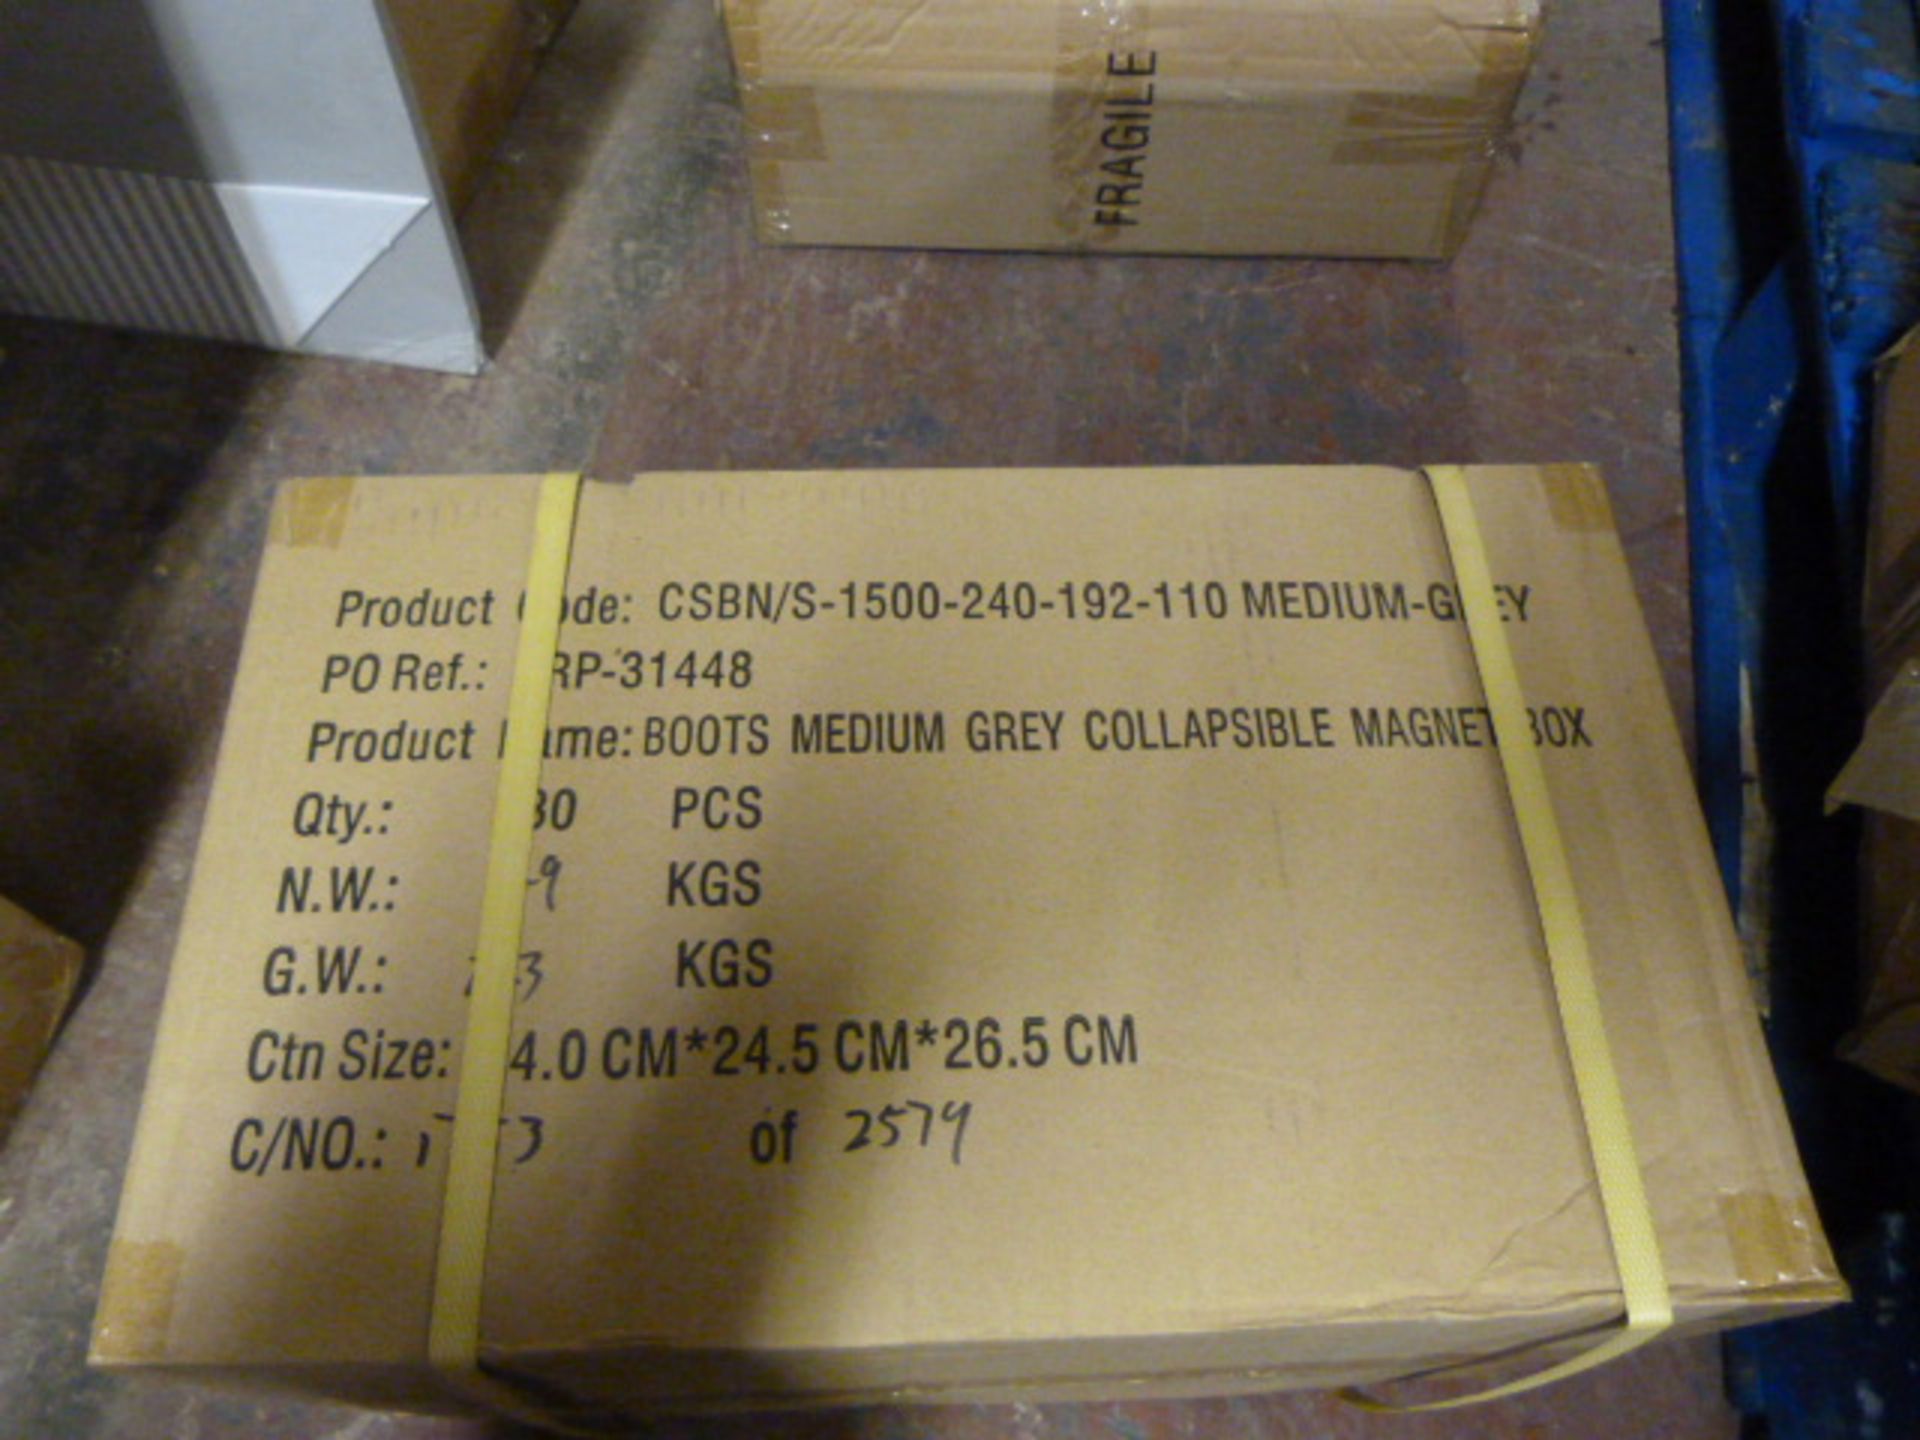 *Box of 30 Medium Grey 44x24.5x26.5cm Collapsible